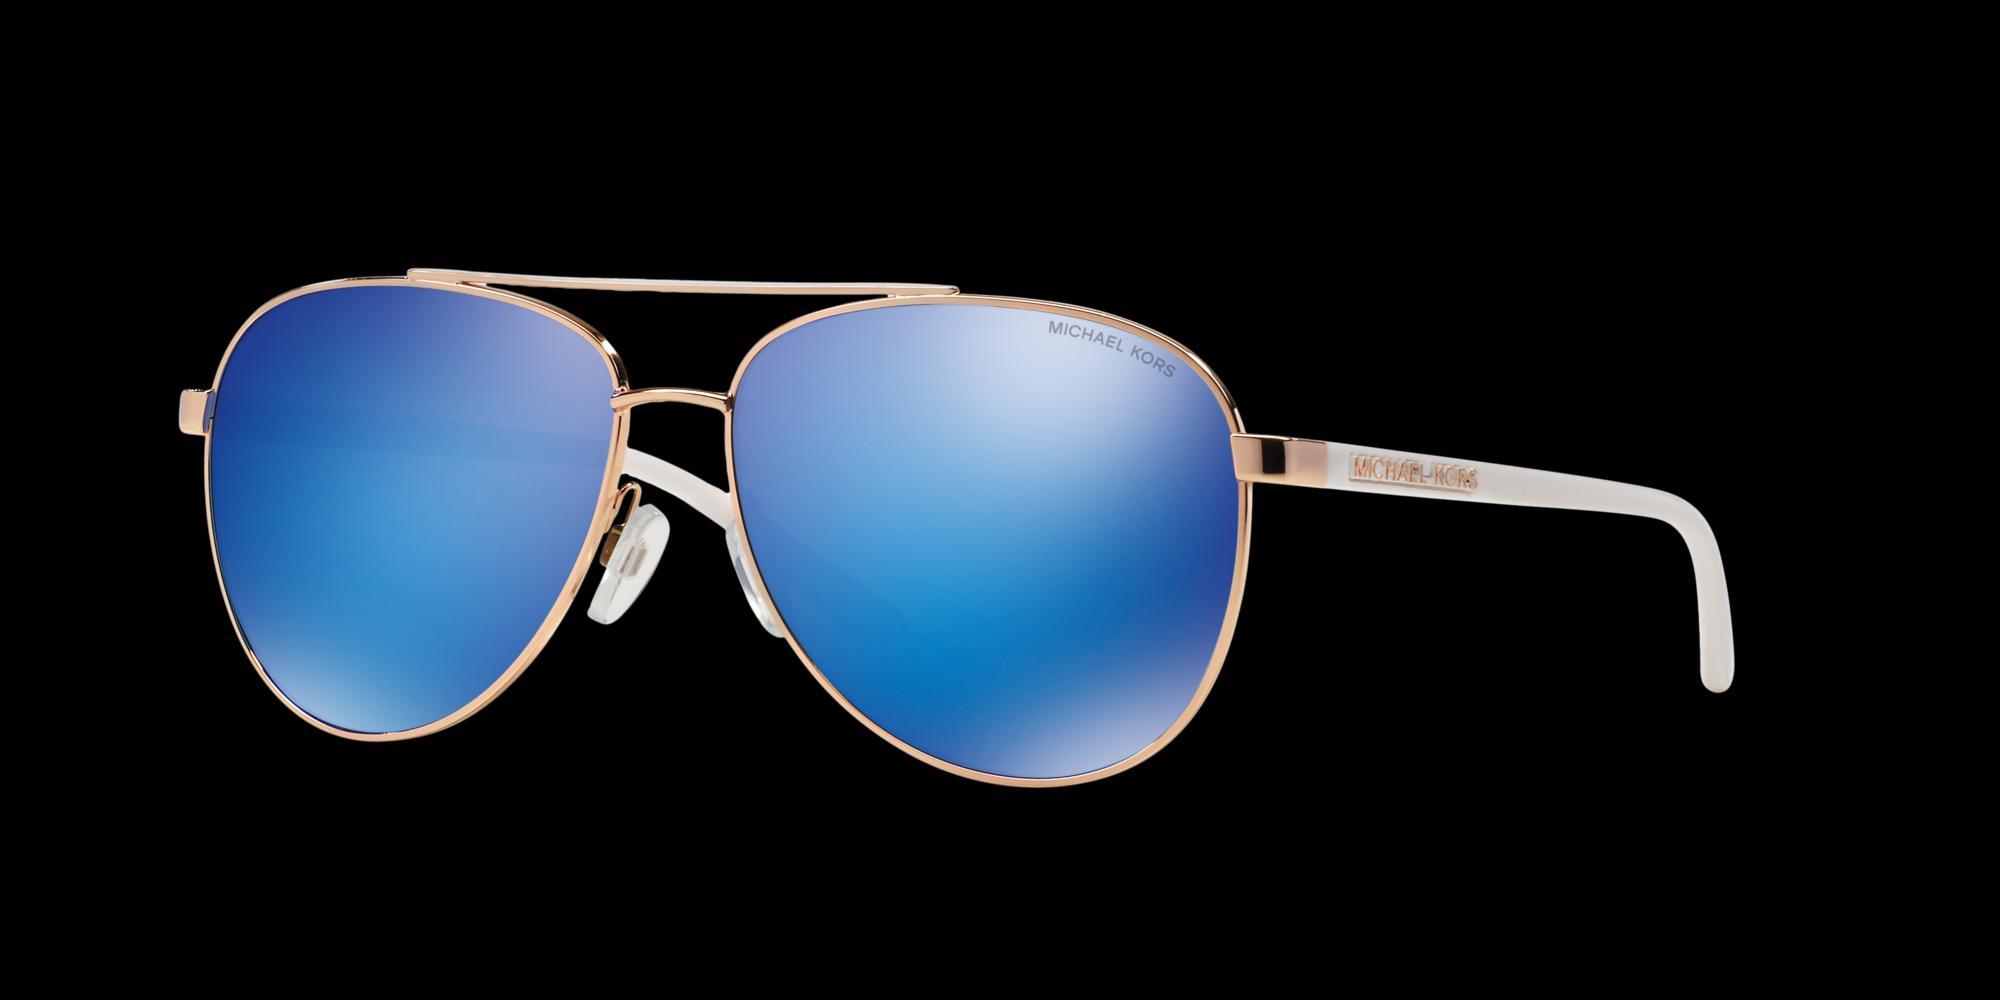 Michael Kors 59mm Aviator Sunglasses Product Image